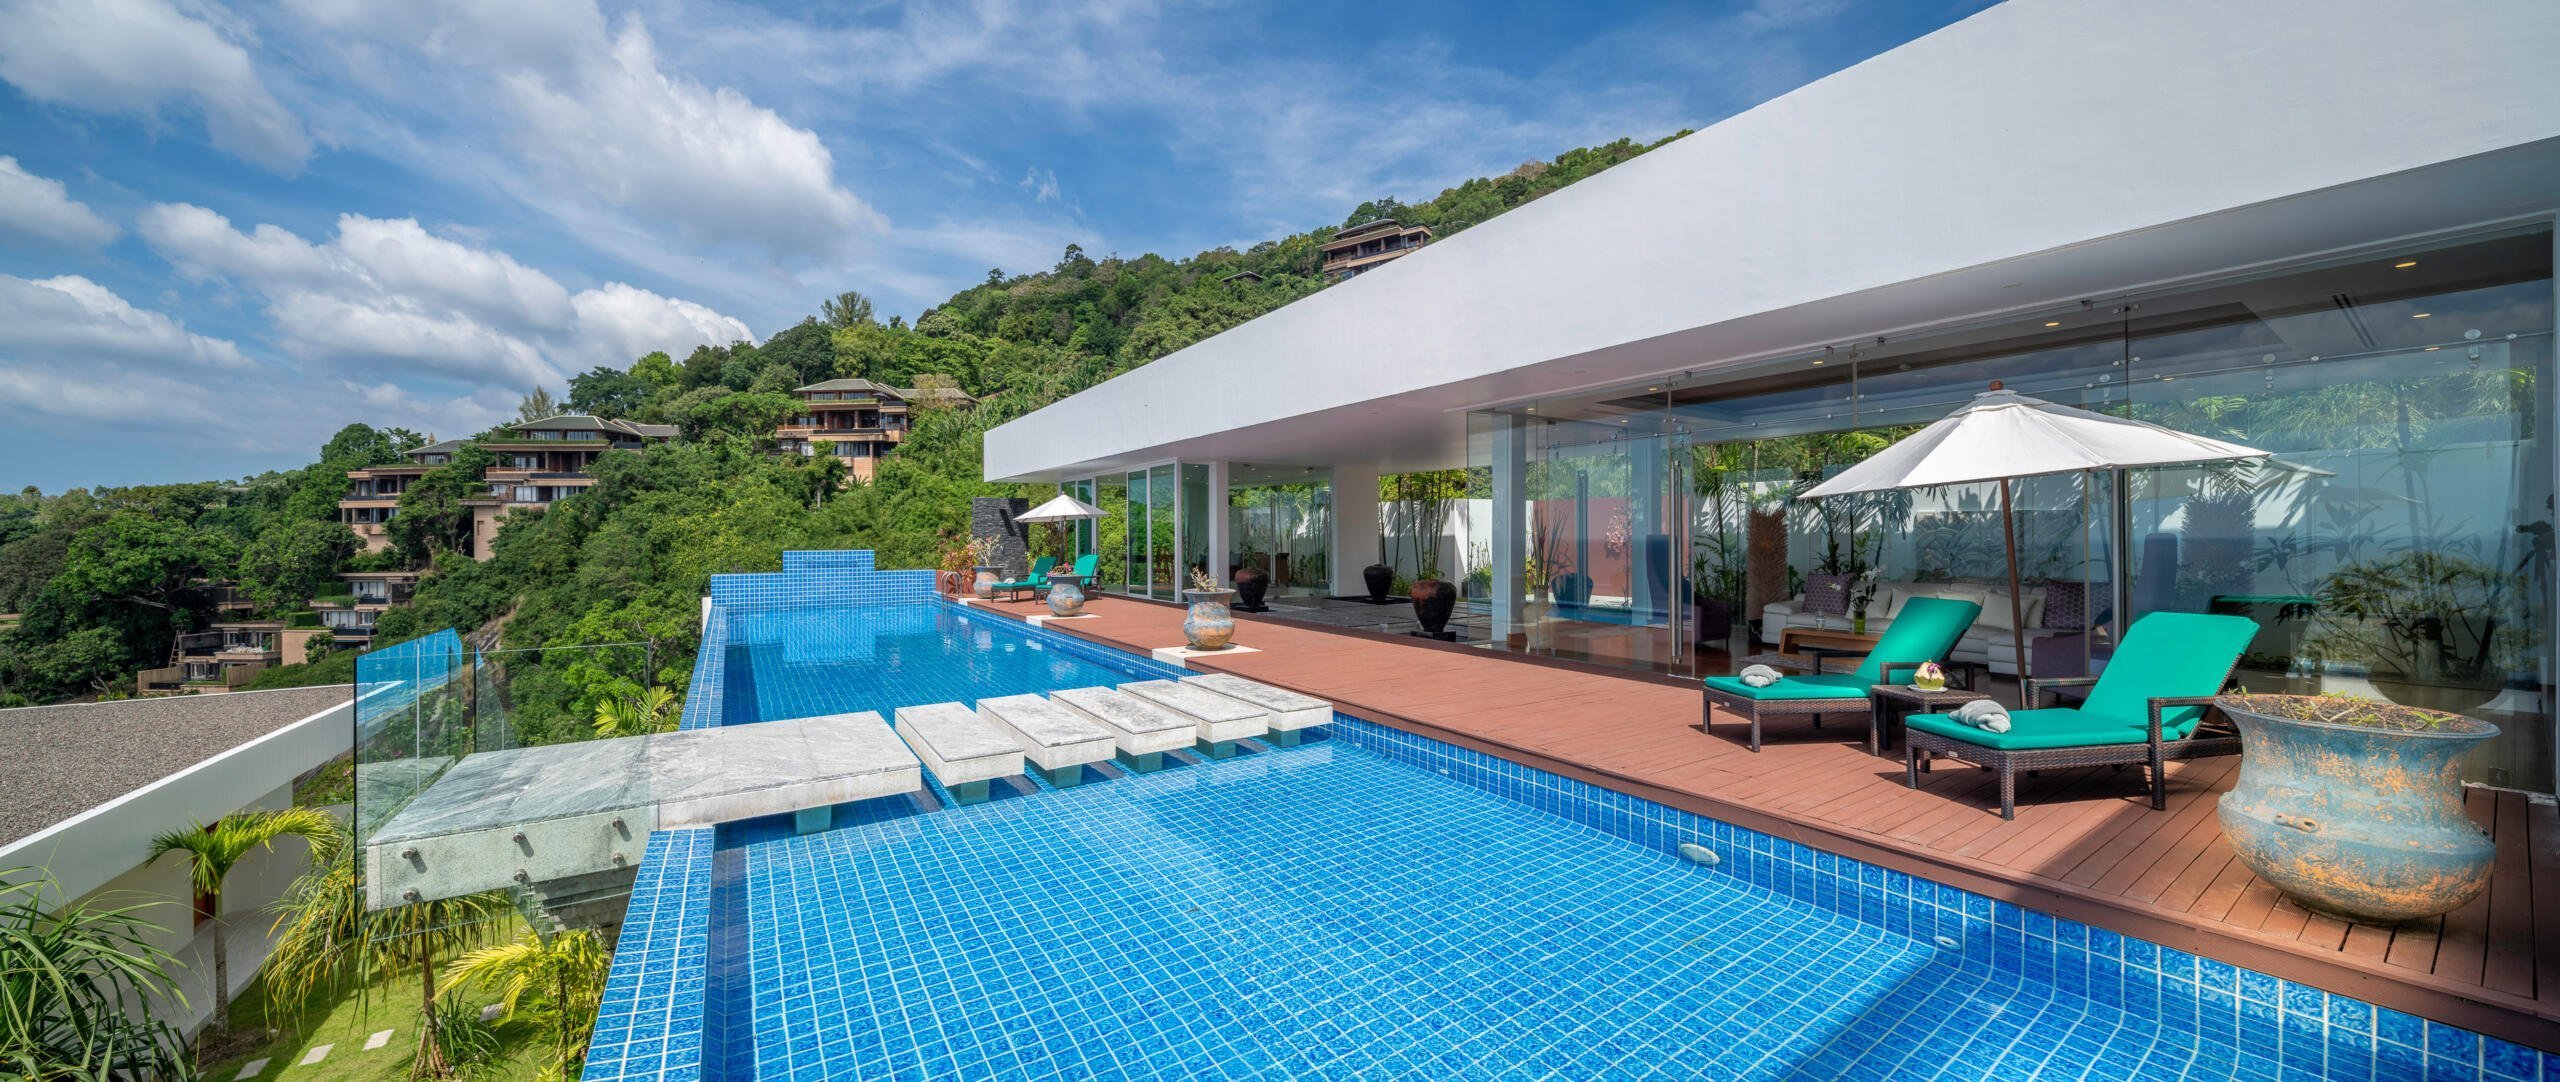 villa solaris main swimming pool, sitting and lounge room exterior